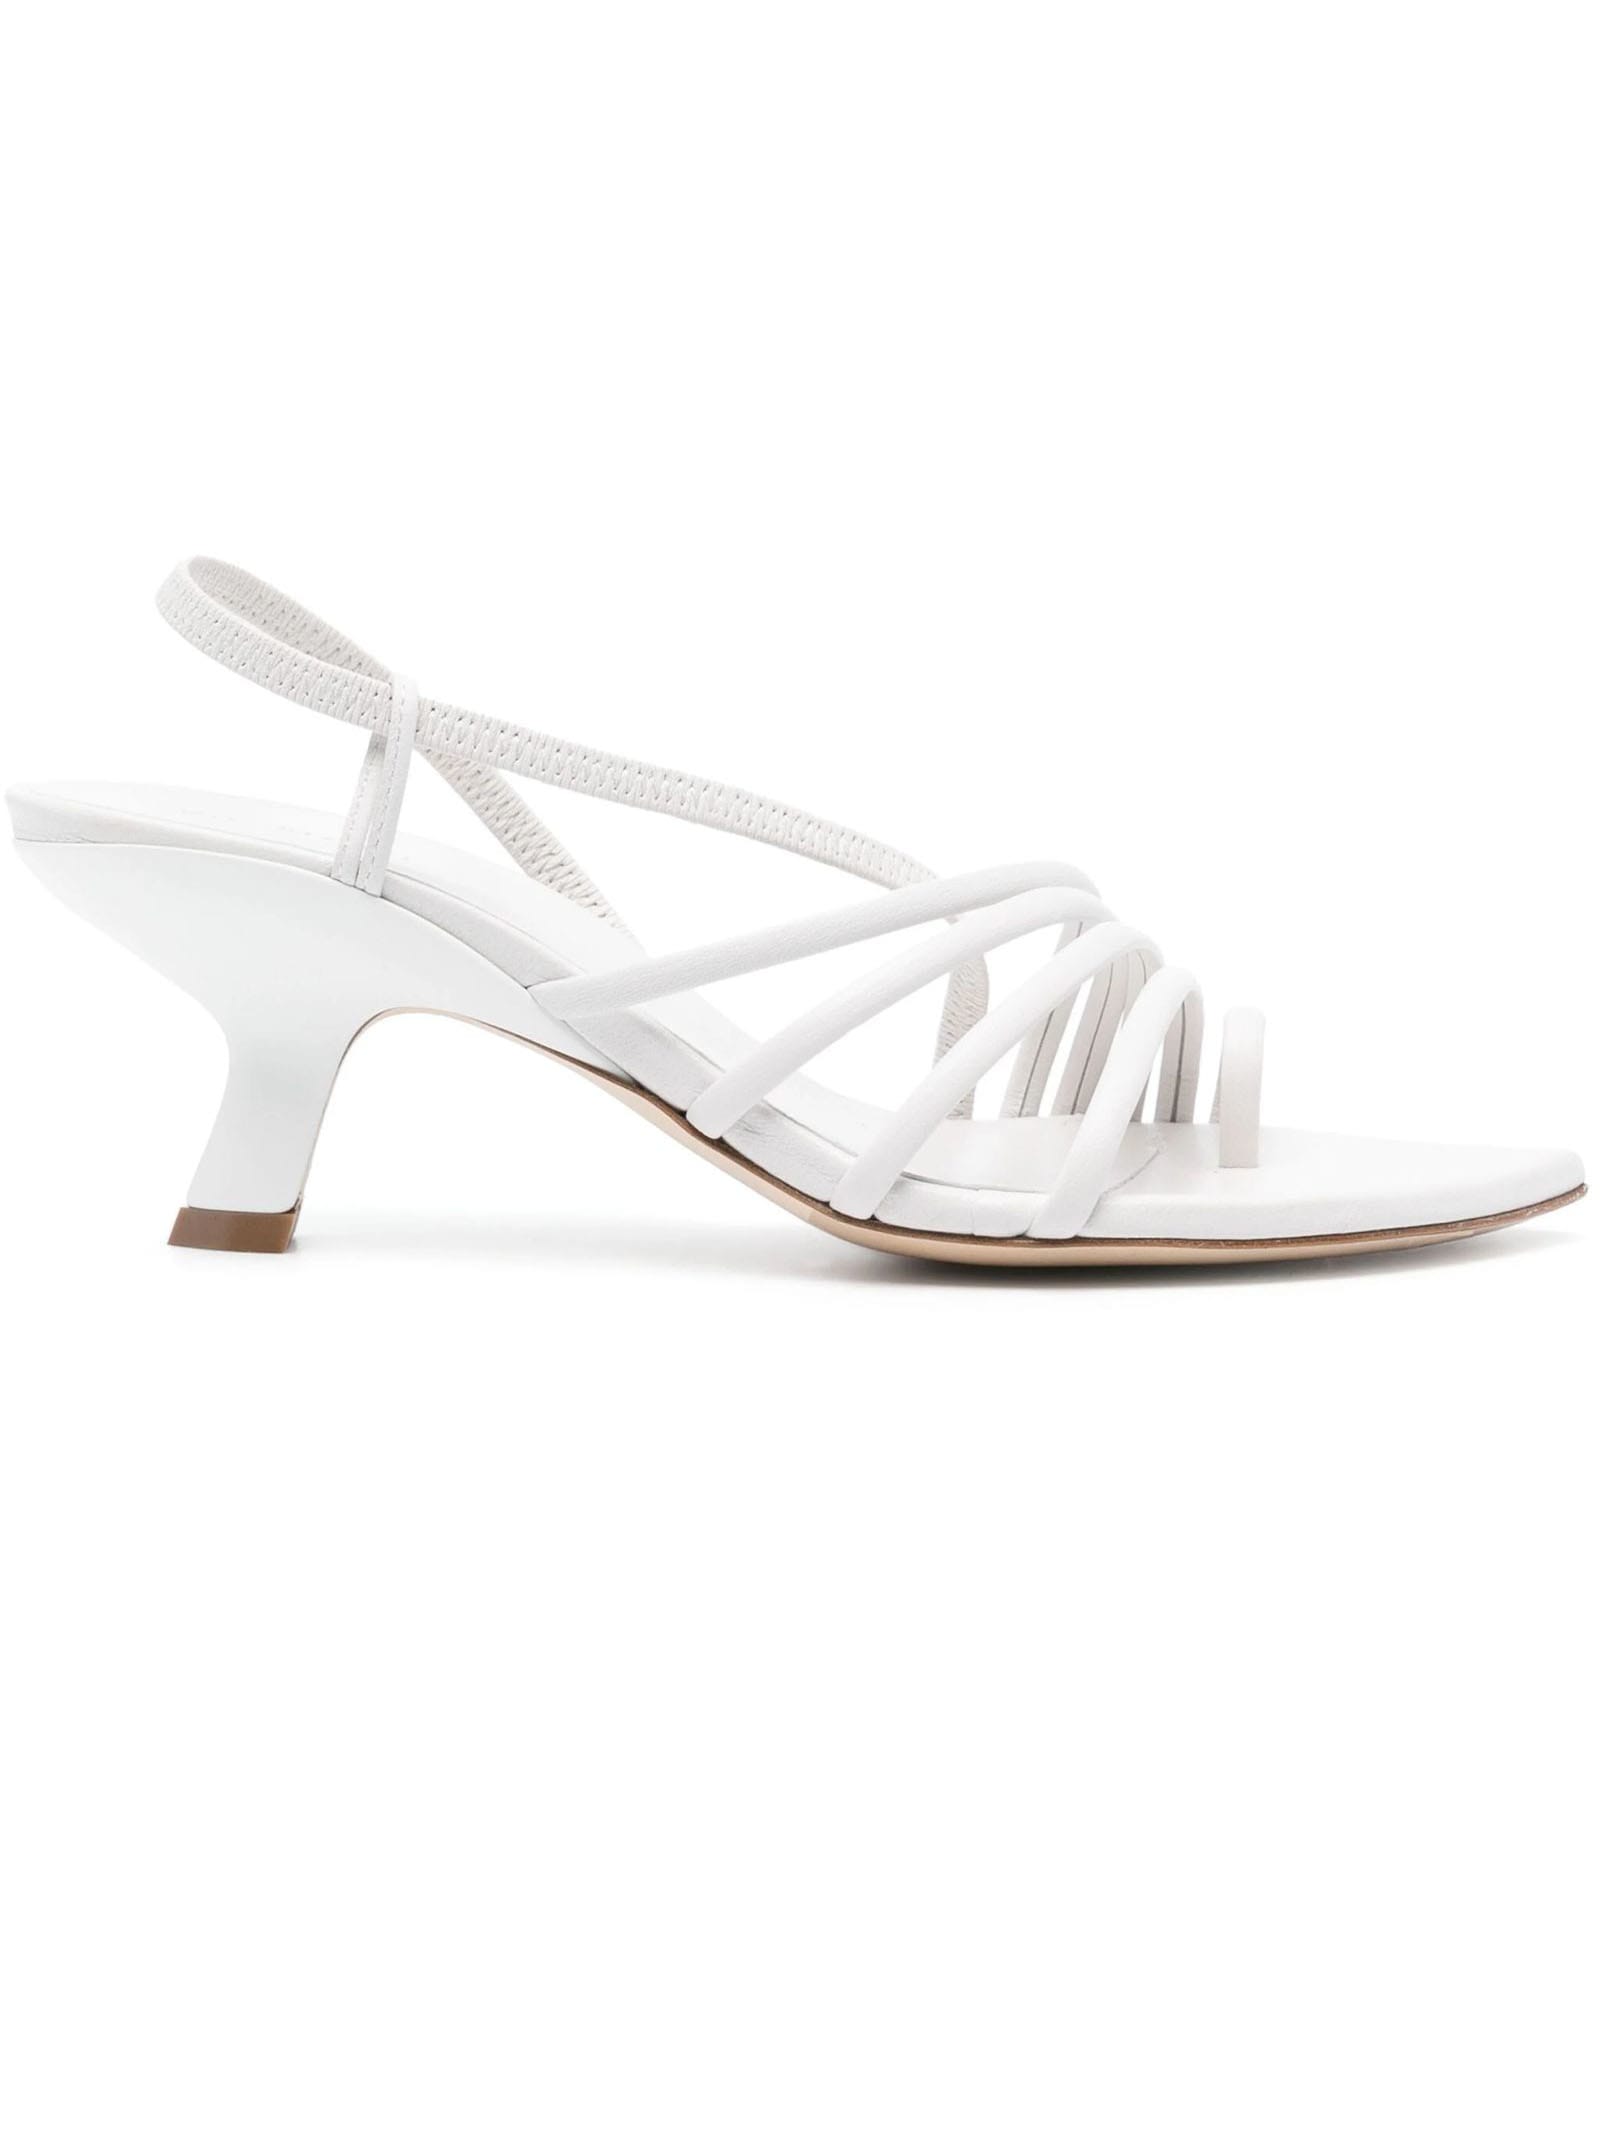 Vic Matie Slash Sandals In Soft White Nappa